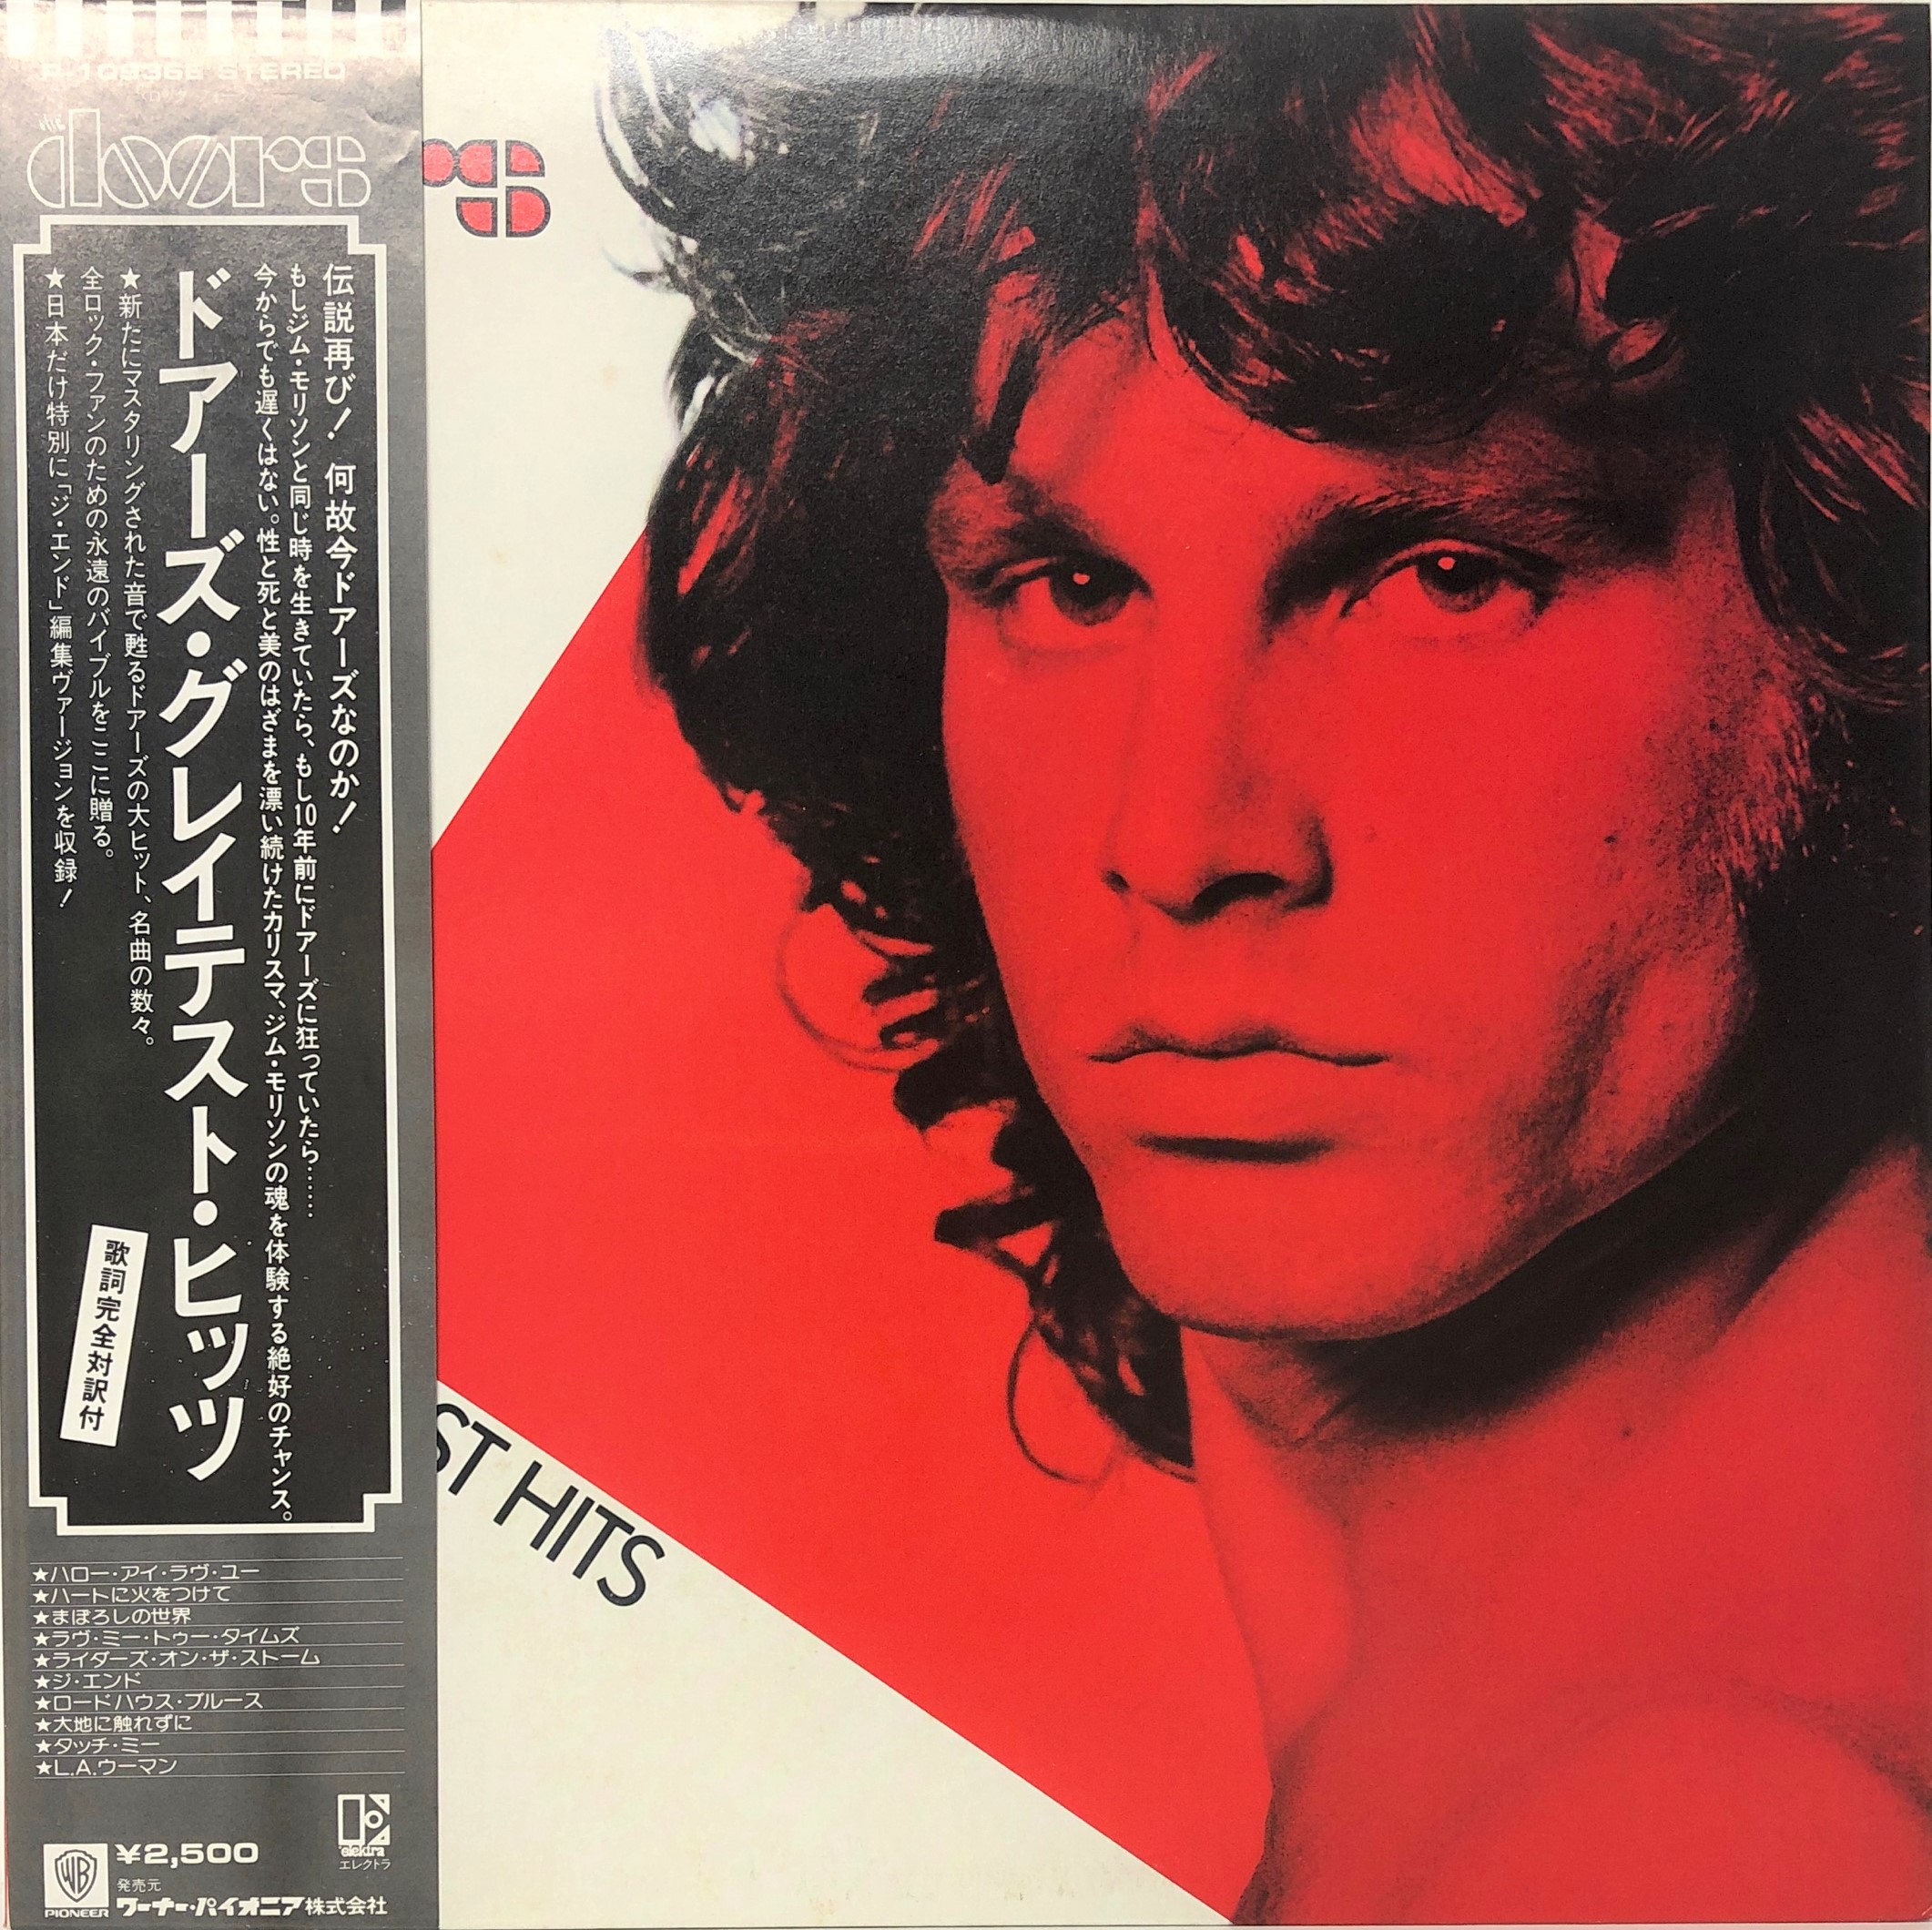 The Doors ‎– Greatest Hits | 中古レコード通販・買取のアカル・レコーズ